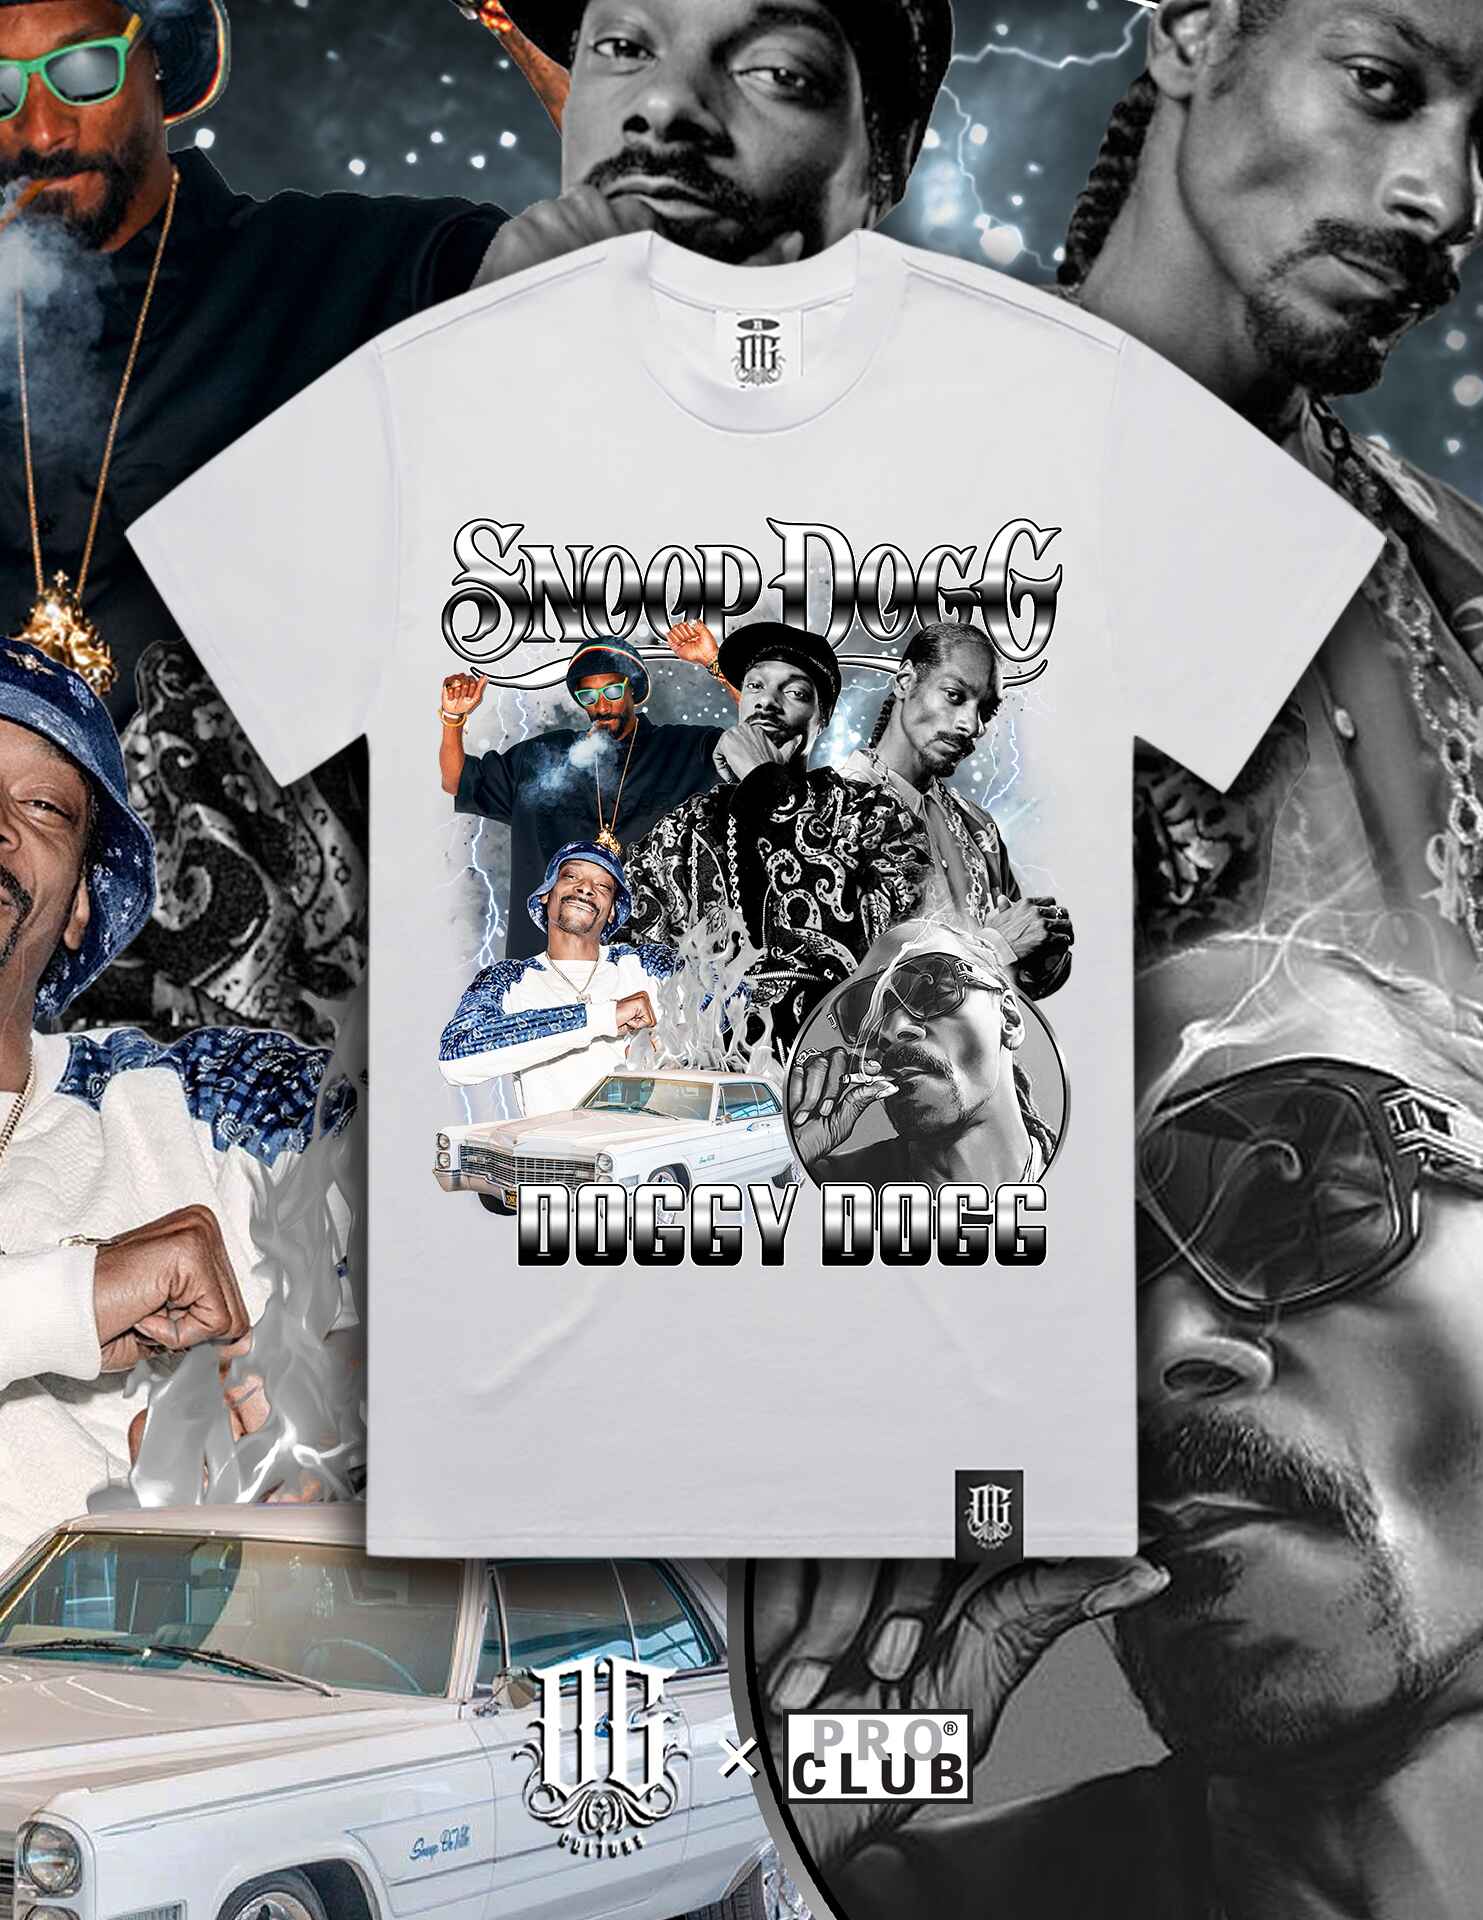 OG Culture X Pro Club Digital Printed Heavyweight Tee - Snoop Dogg Doggy Dogg